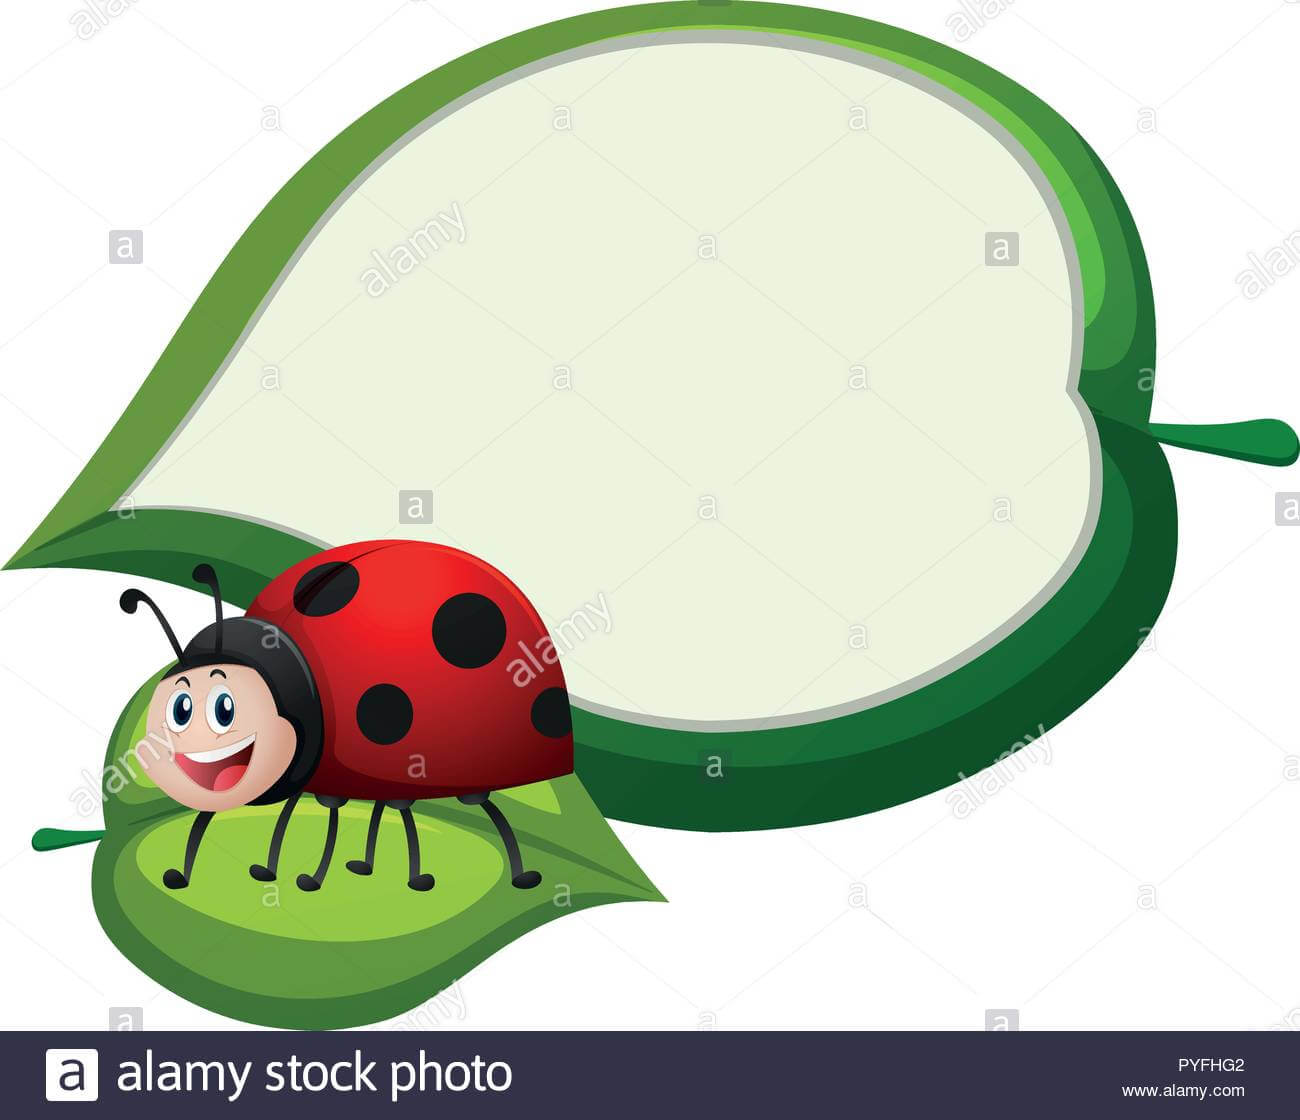 Border Template With Ladybug On Leaf Illustration Stock With Regard To Blank Ladybug Template